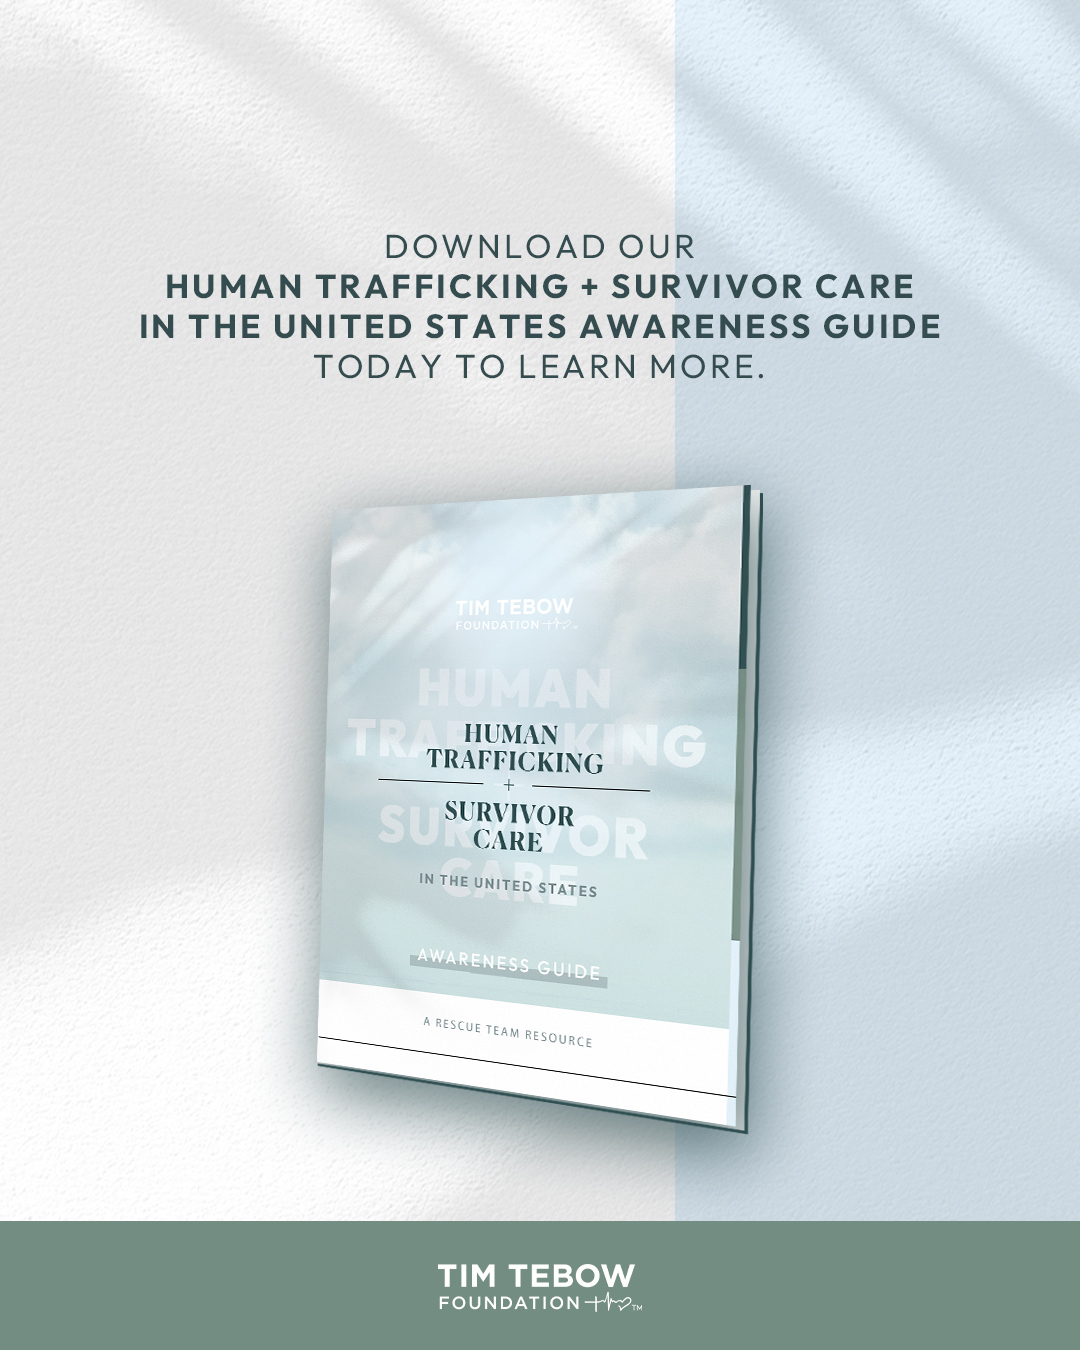 Download the Human Trafficking Awareness Guide